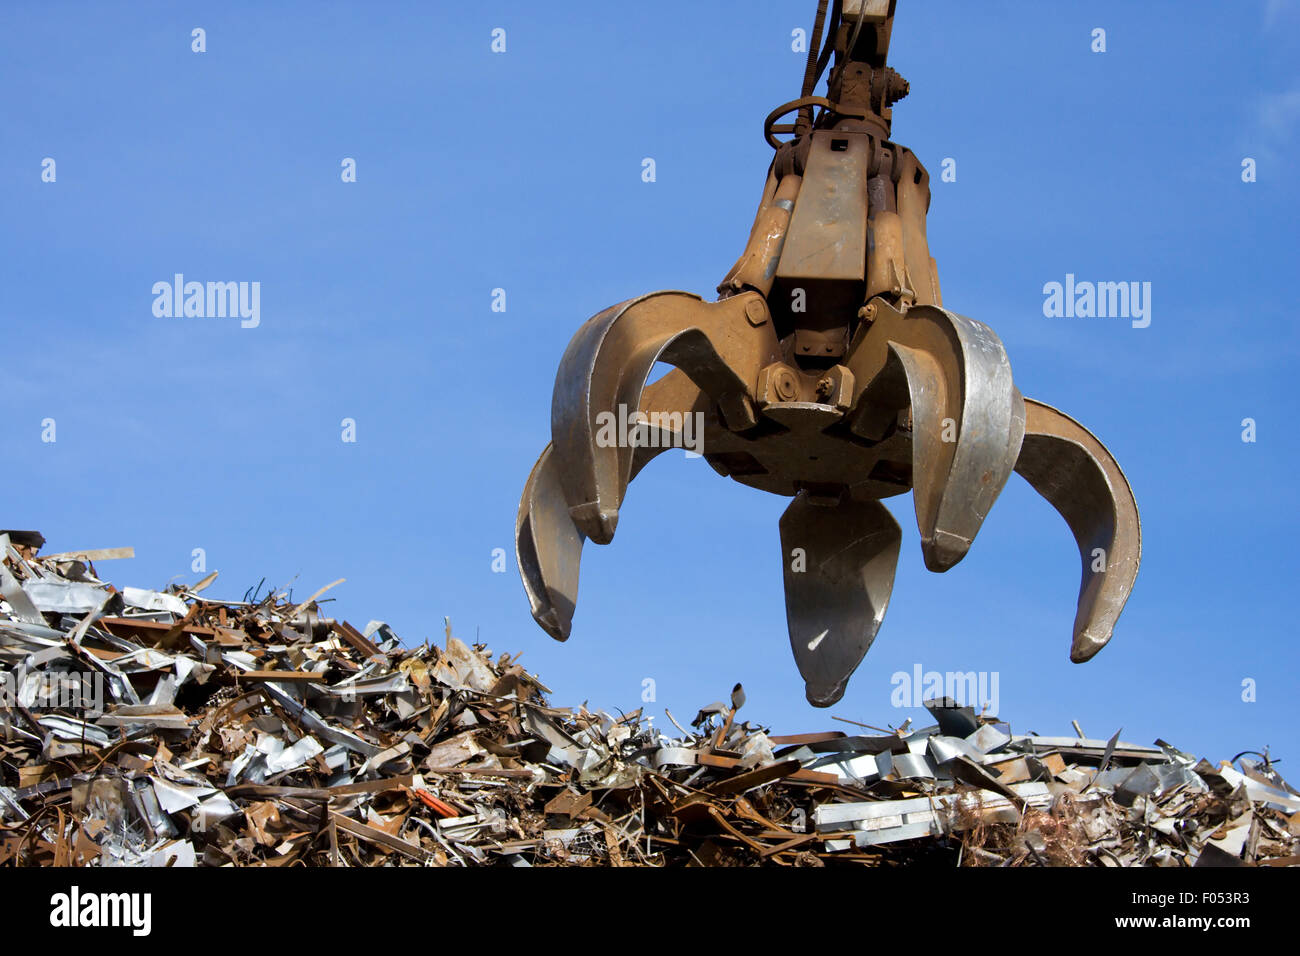 Crane grabber loading metal scrap Stock Photo